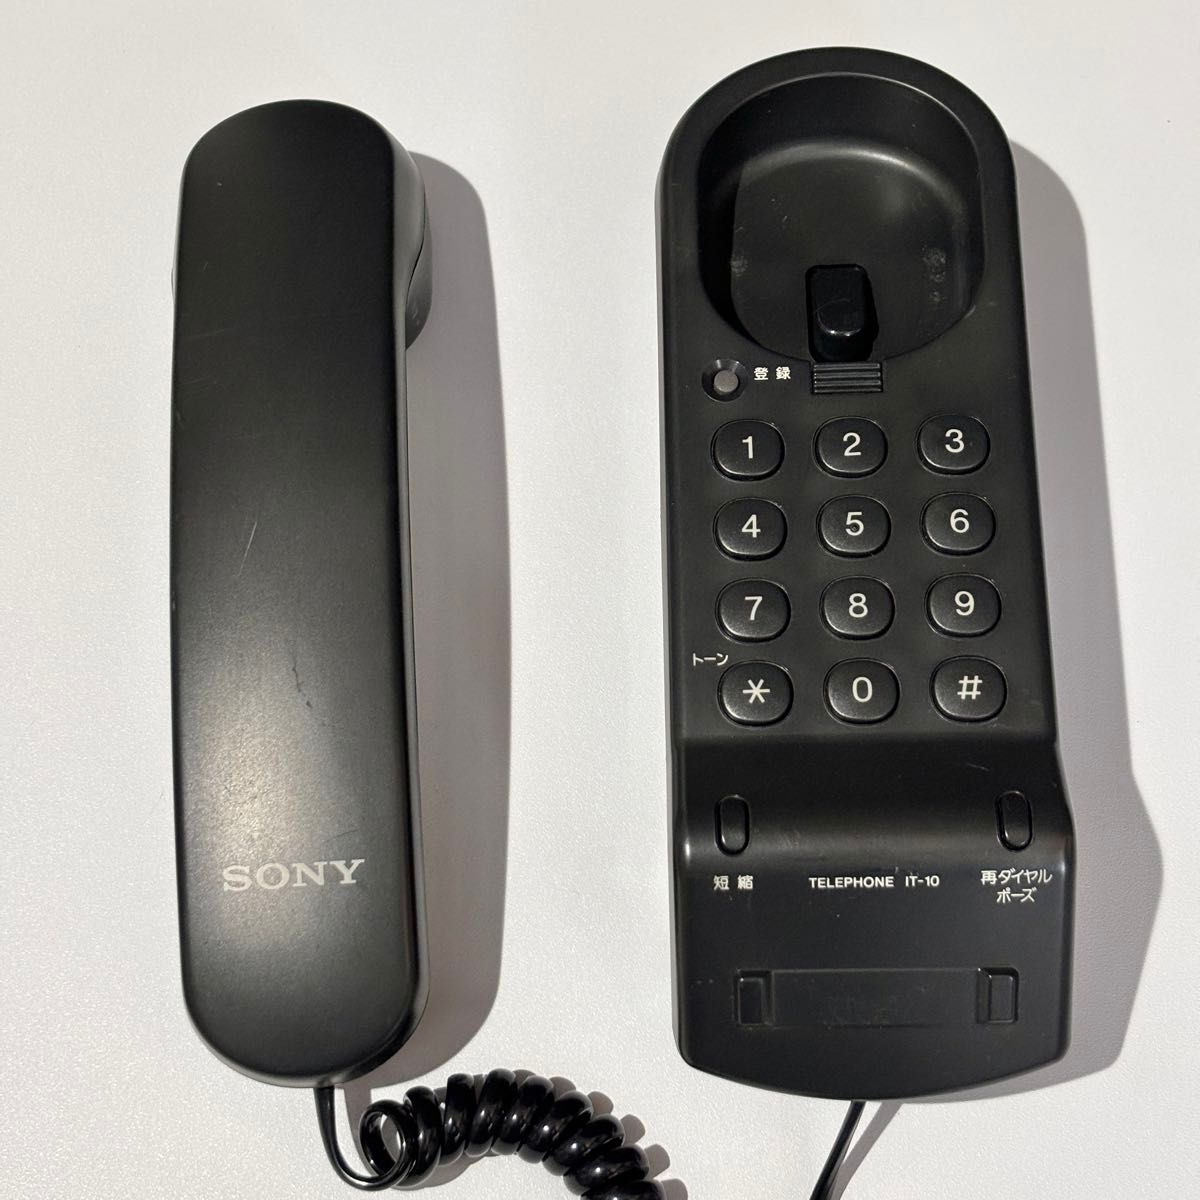 SONY ソニー TELEPHONE IT-10 黒電話 電源不要